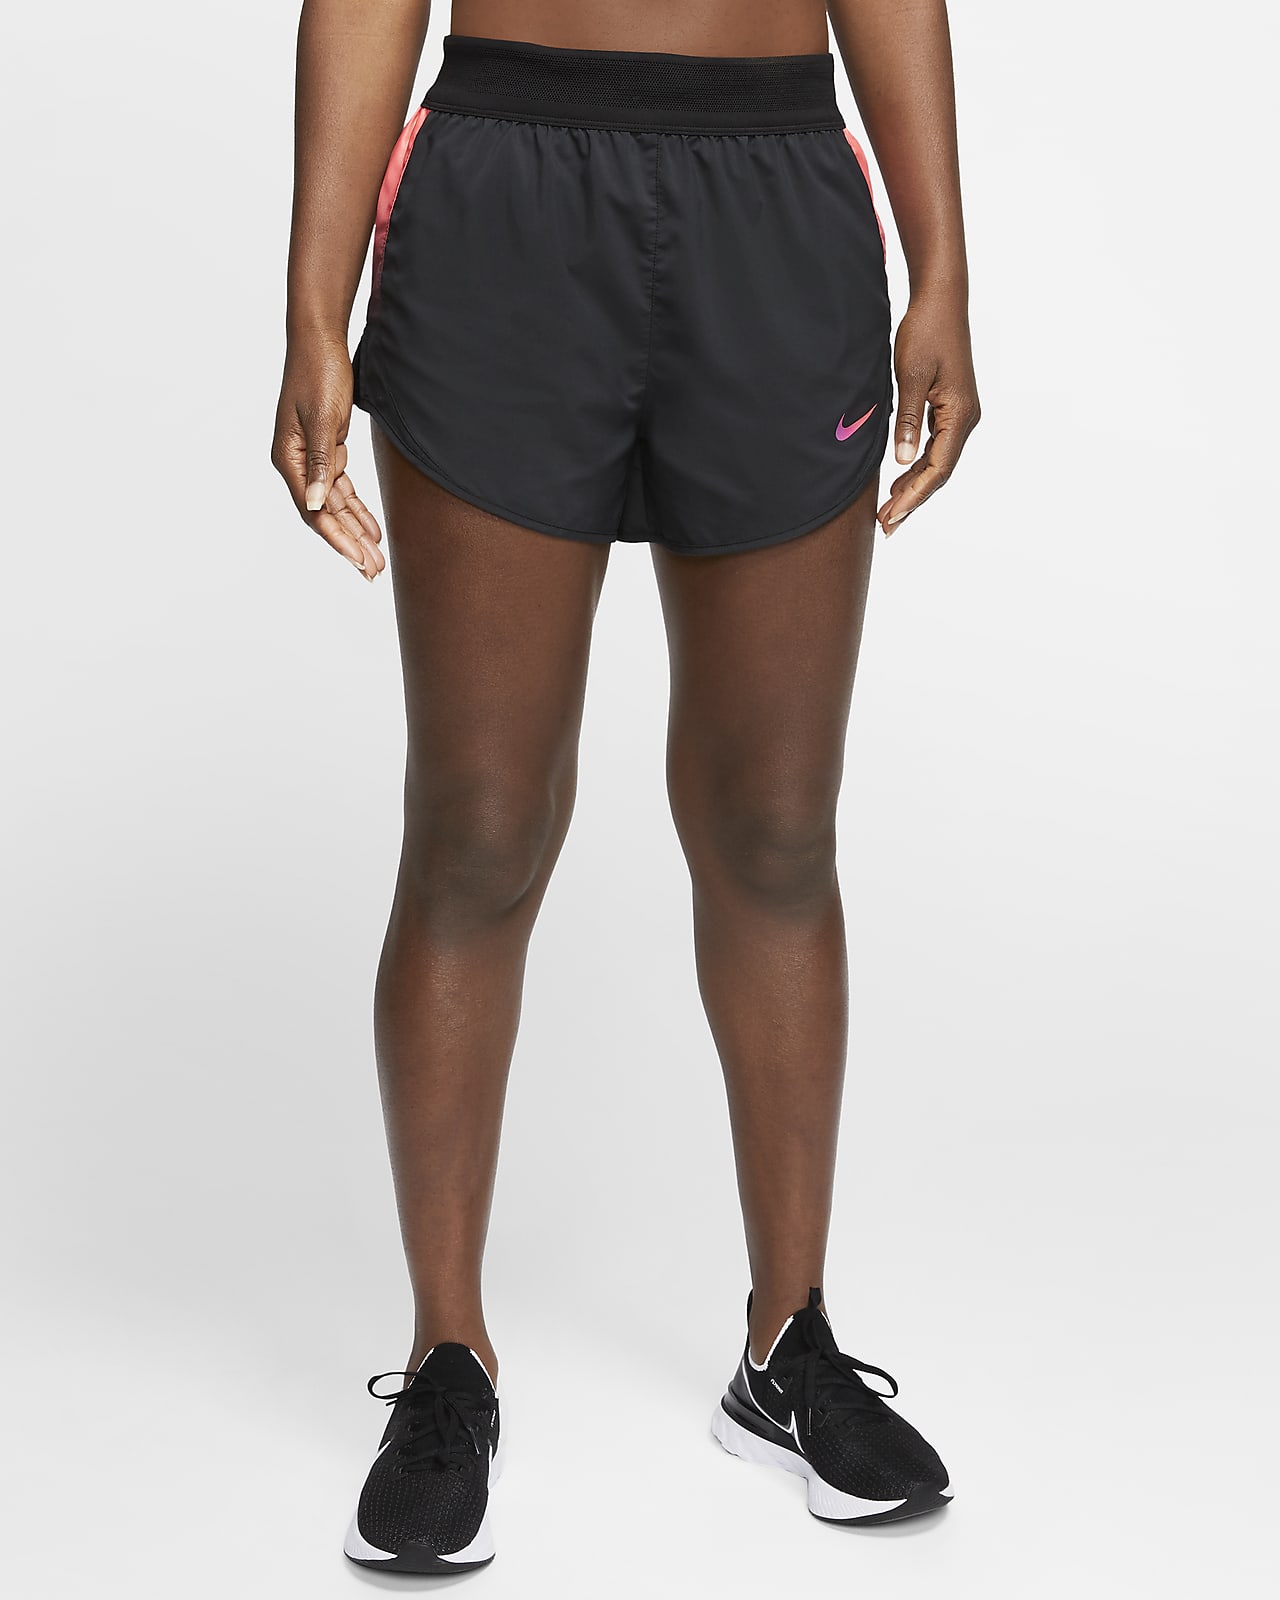 womens long running shorts